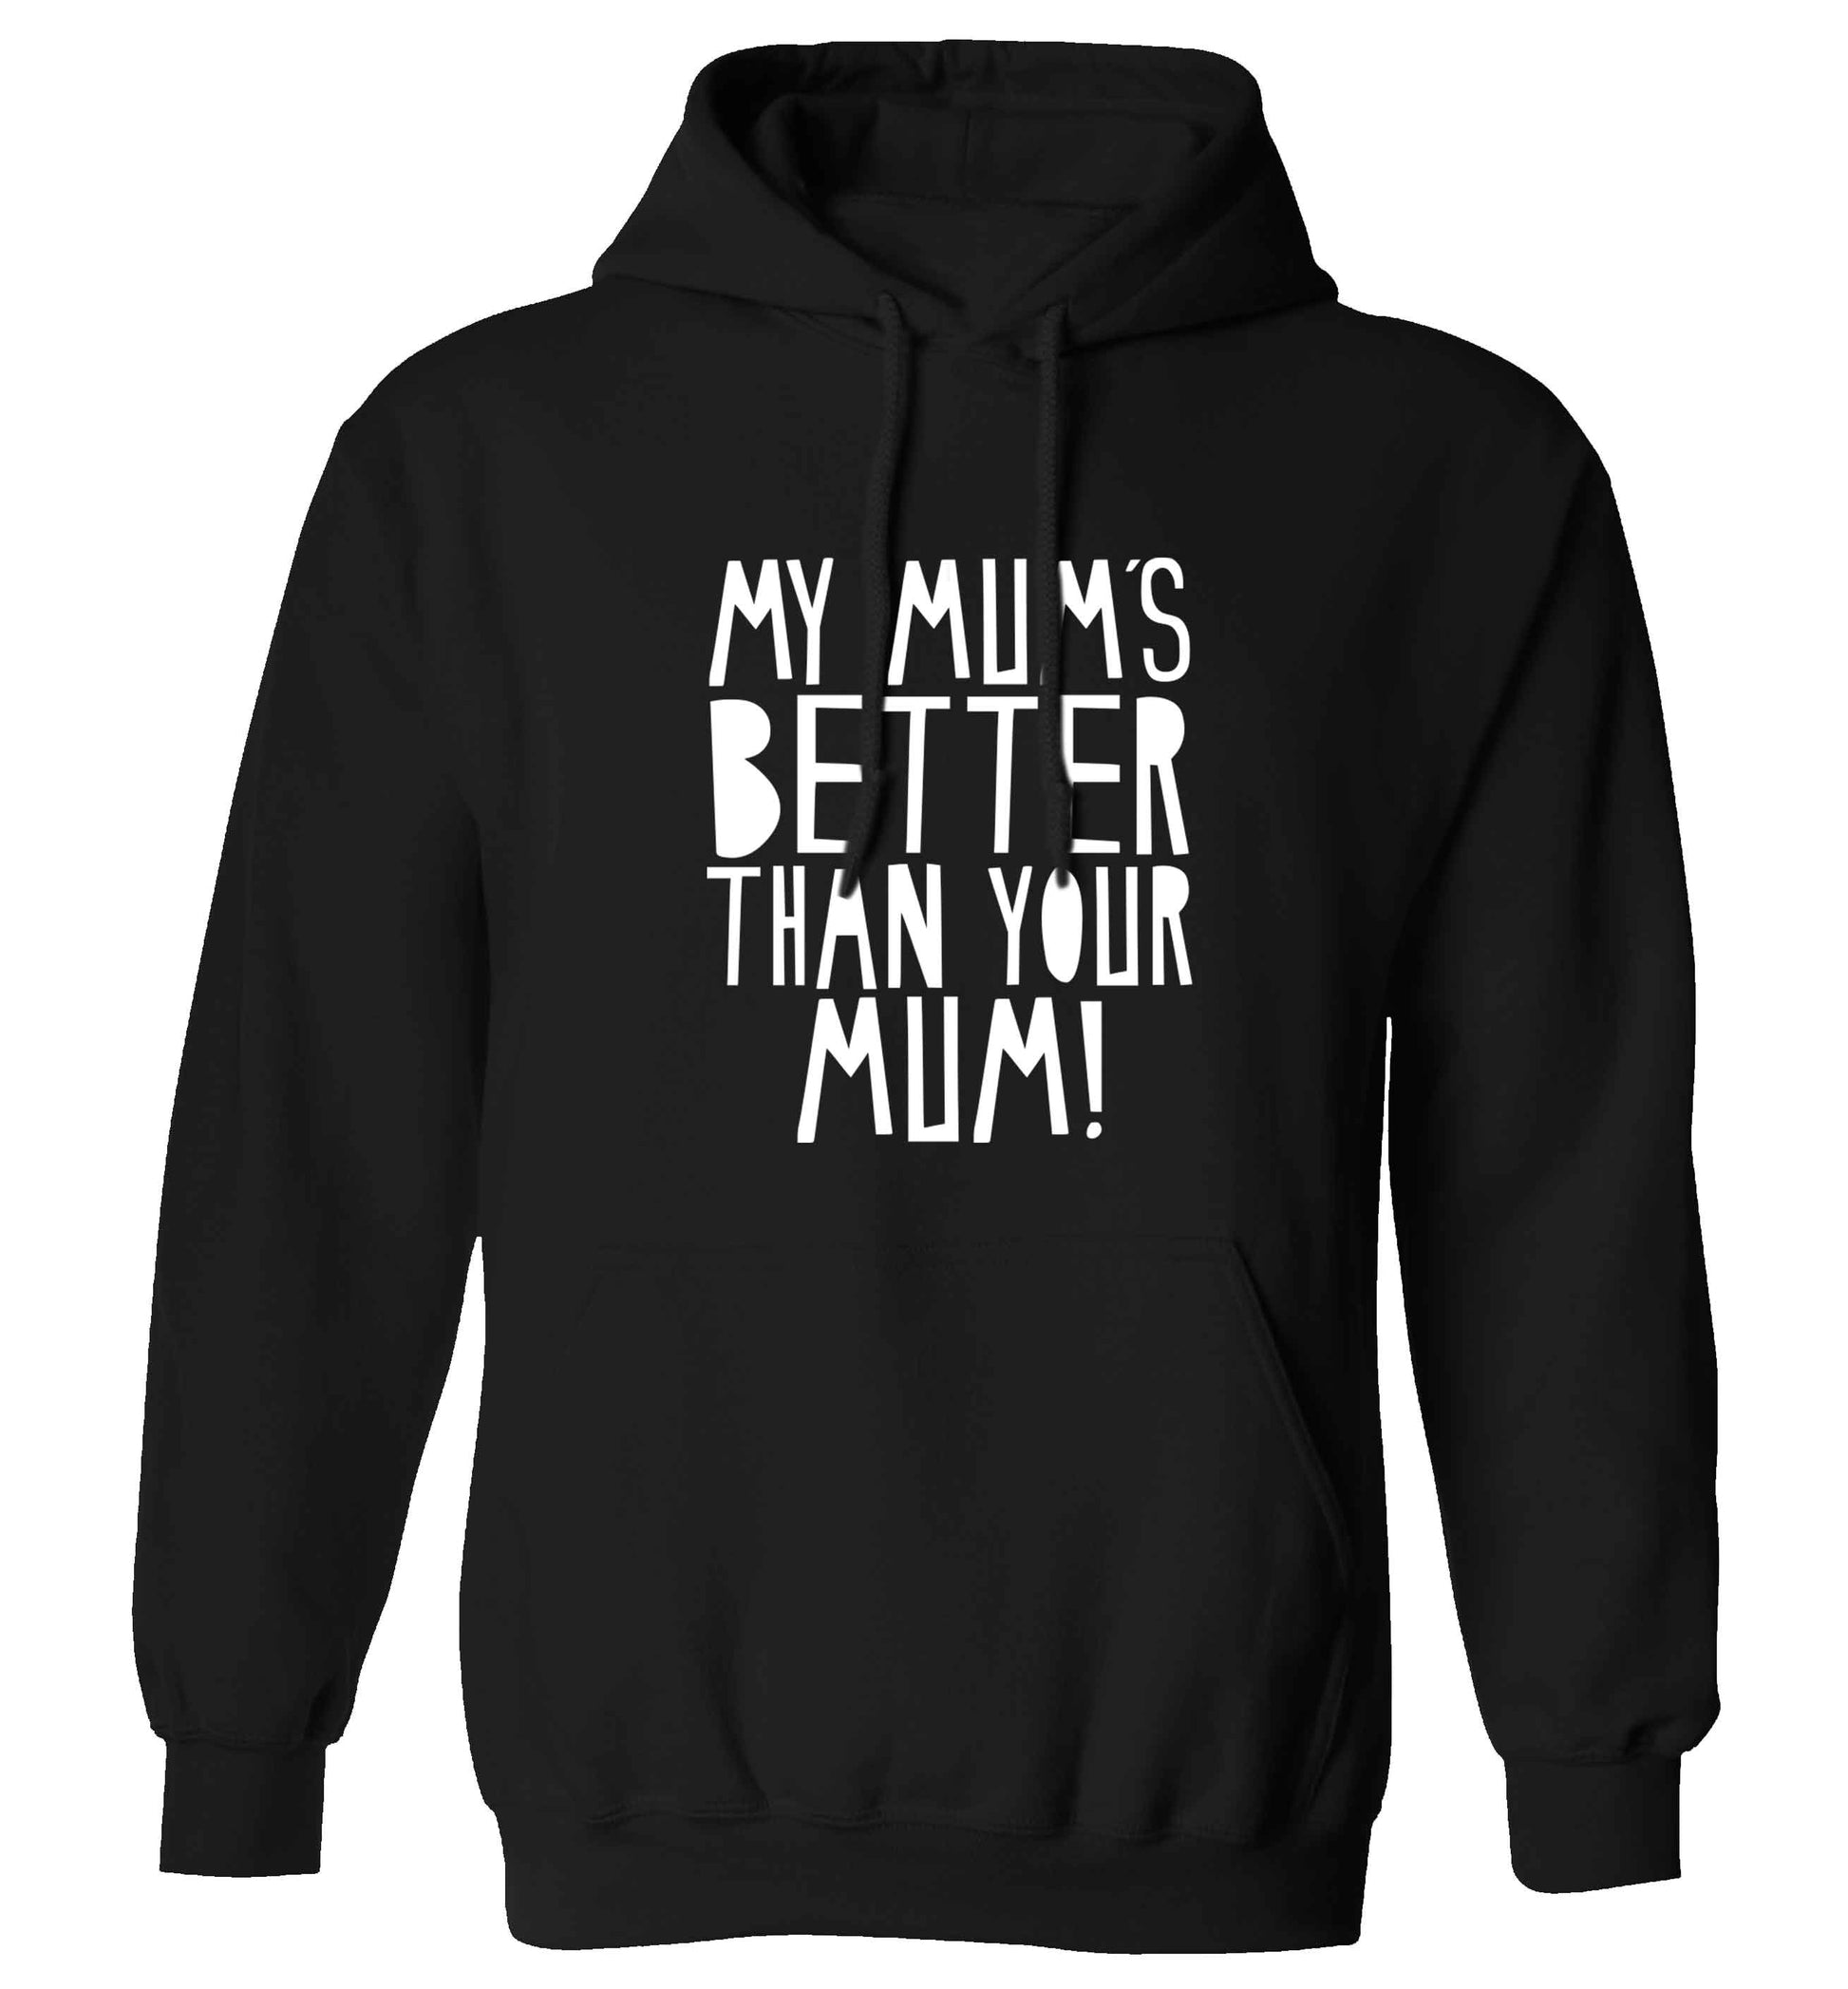 My mum's better than your mum adults unisex black hoodie 2XL